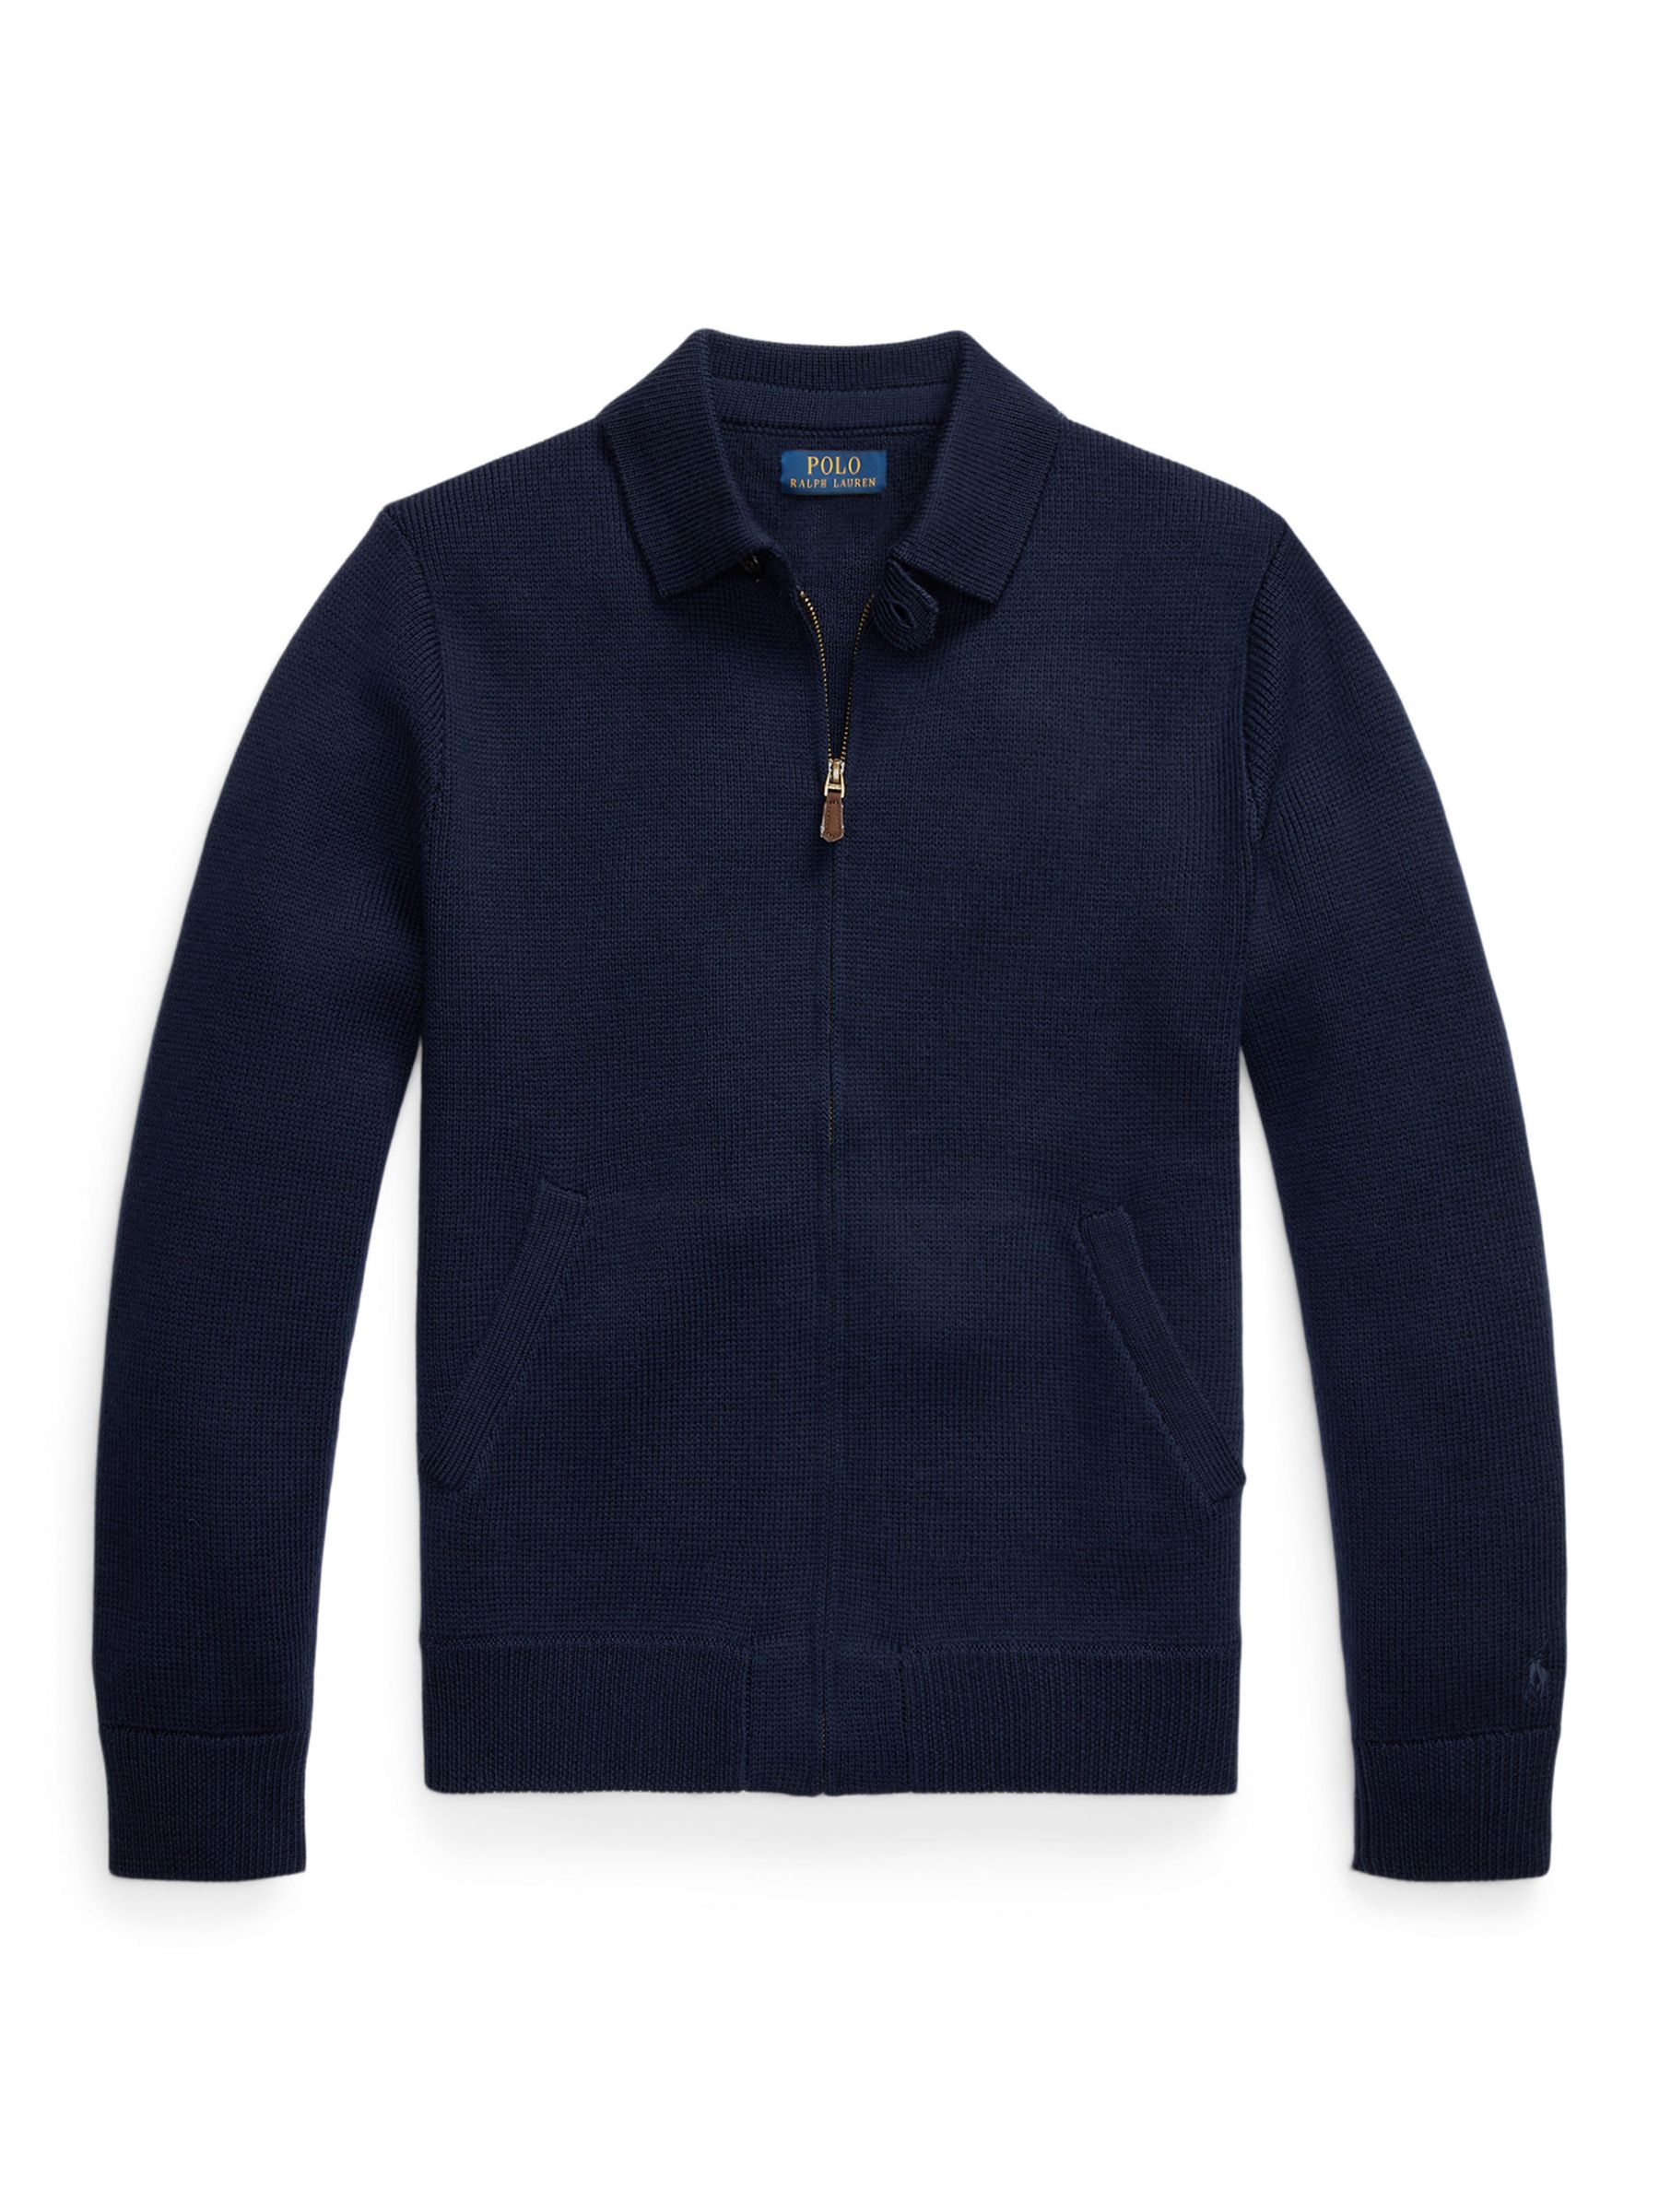 Polo Ralph Lauren Wool Full-Zip Sweater, Hunter Navy at John Lewis ...